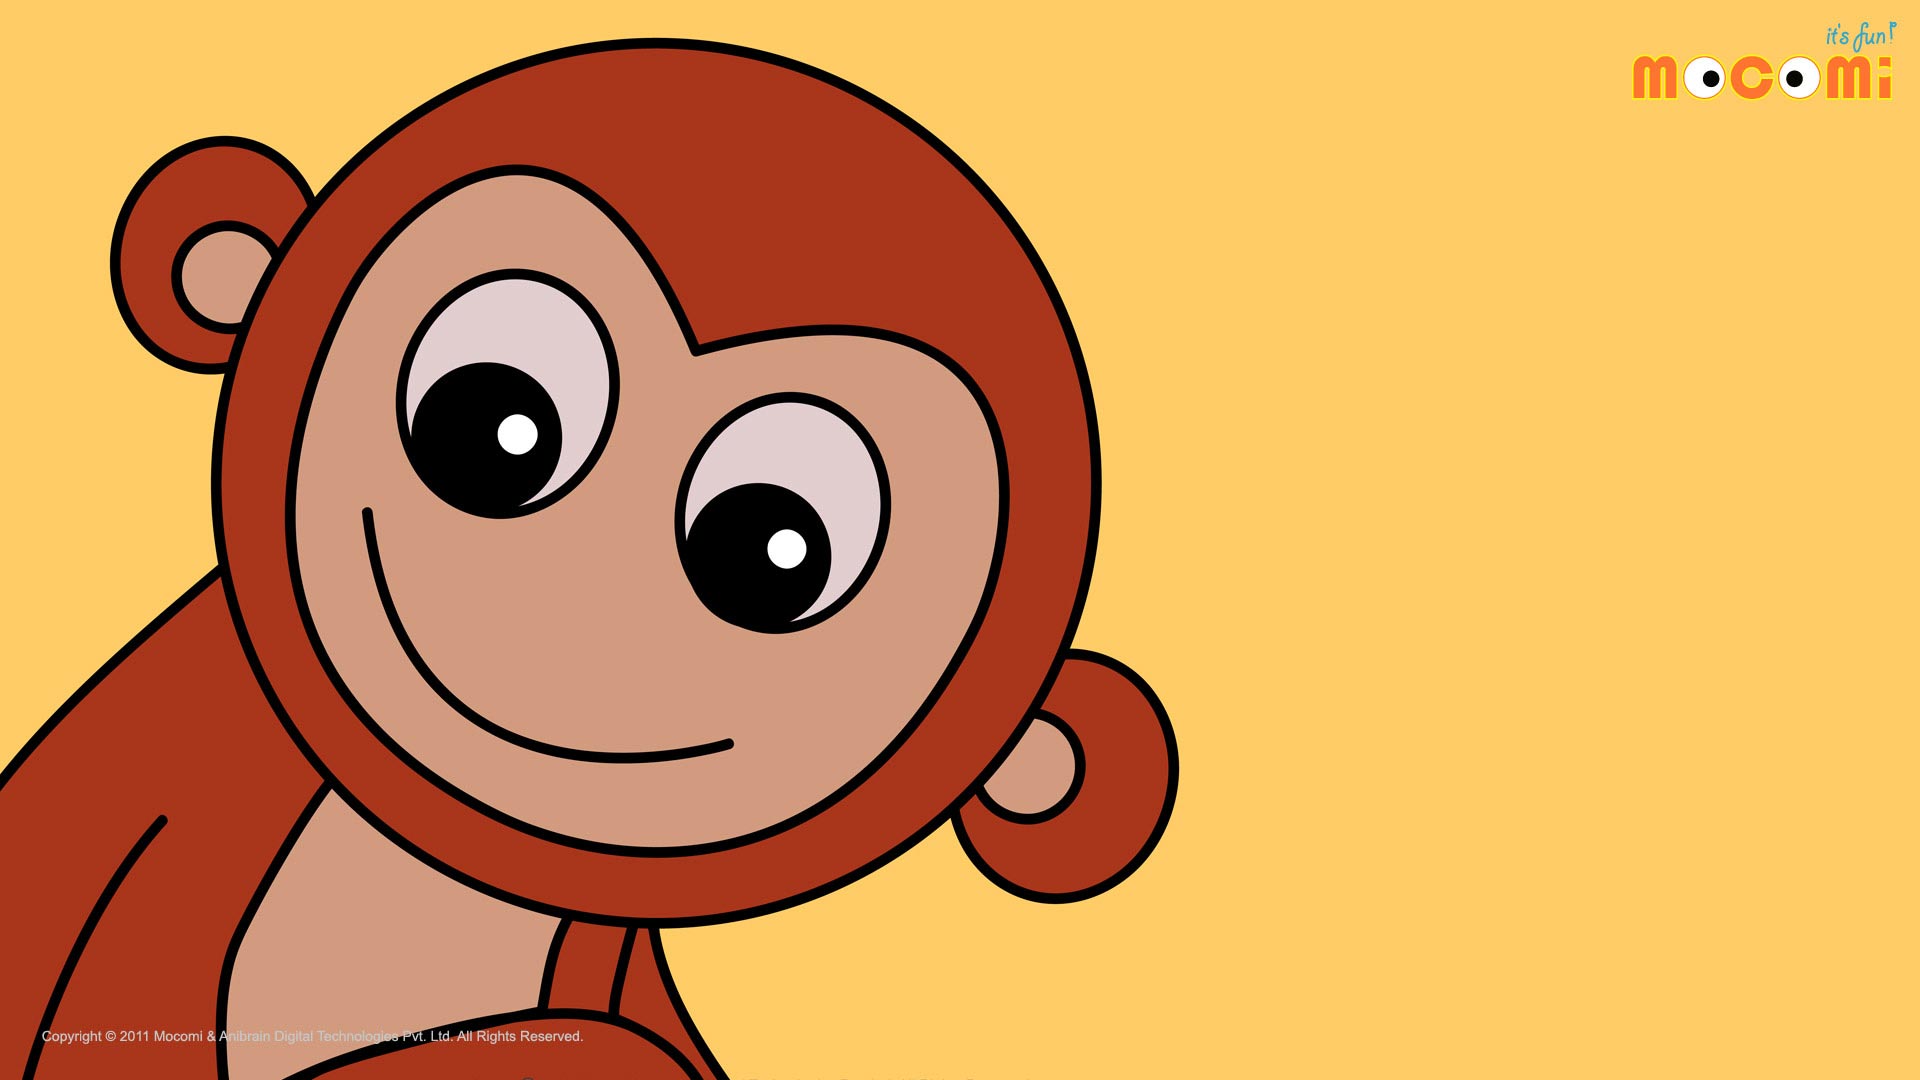 Monkey yellow - Desktop Wallpapers for kids | Mocomi